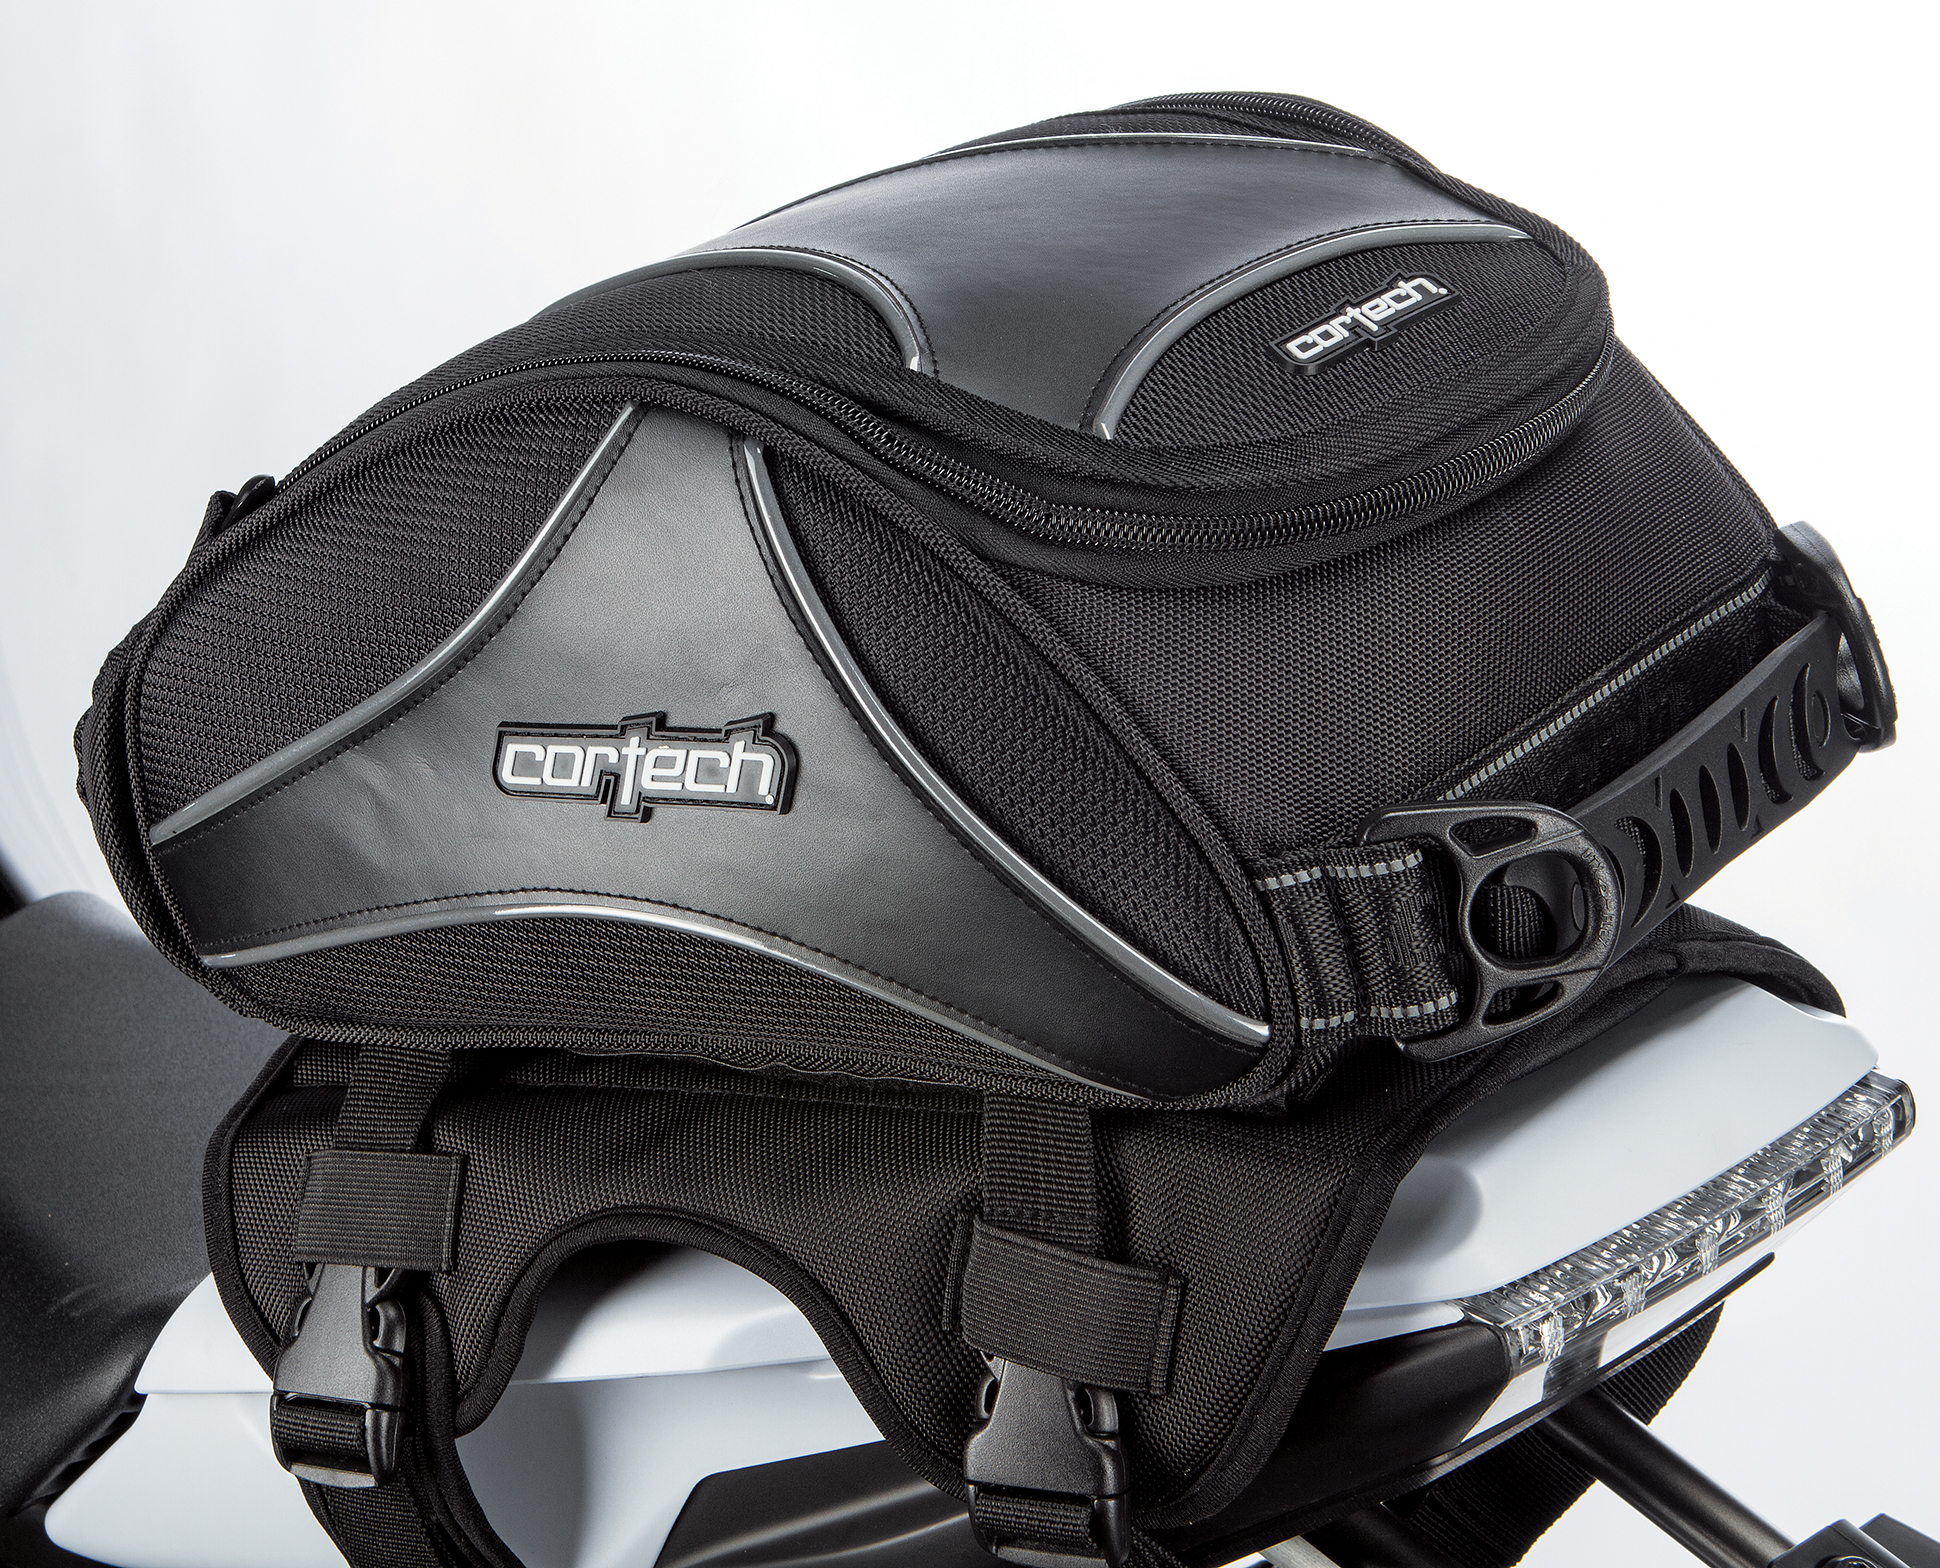 Cortech Super 2.0 14-Liter Motorcycle Tail Bag Luggage 14L Sport Bike